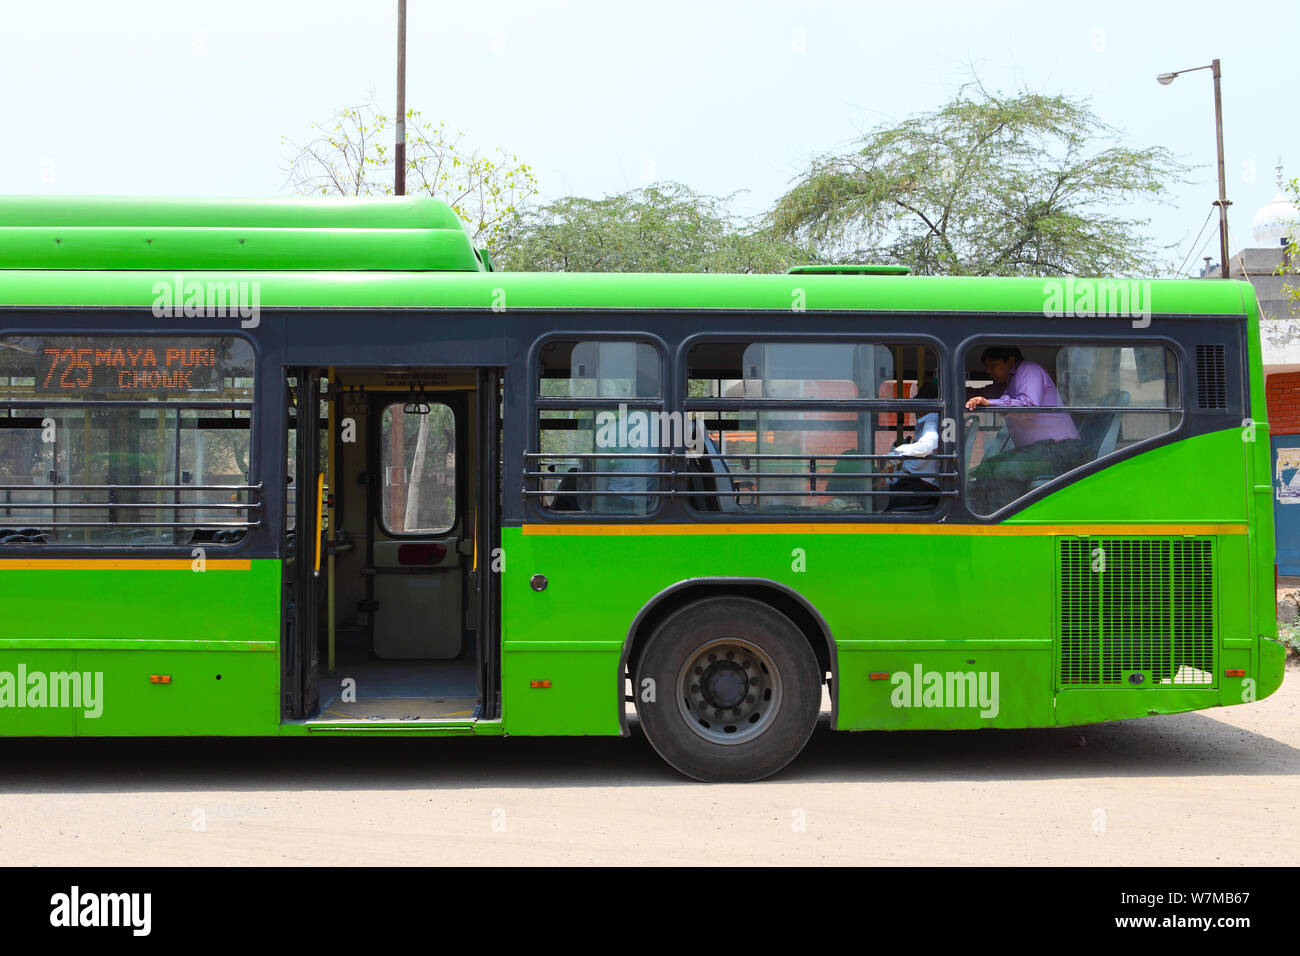 Side profile of a DTC bus, Delhi, India Stock Photo